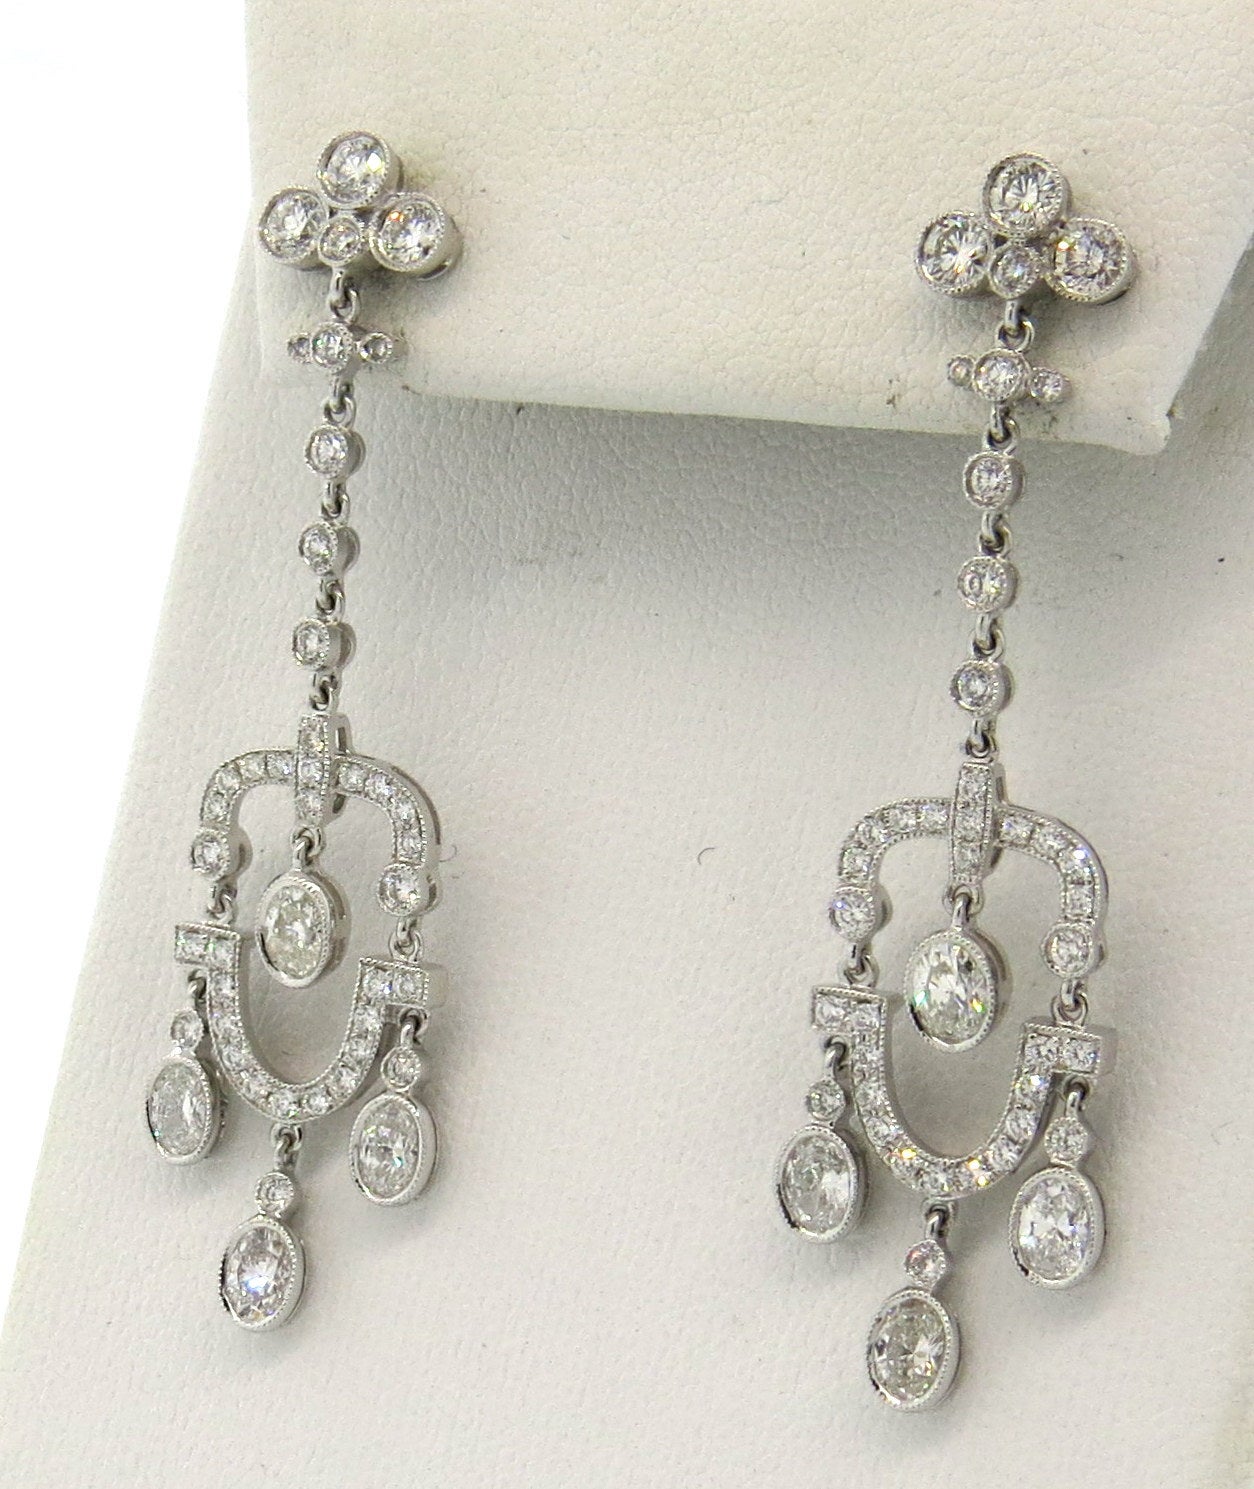 18k gold chandelier earrings,featuring approximately 3.30ctw in diamonds. Earrings measure 54mm x 15mm. Weight - 8.9 grams